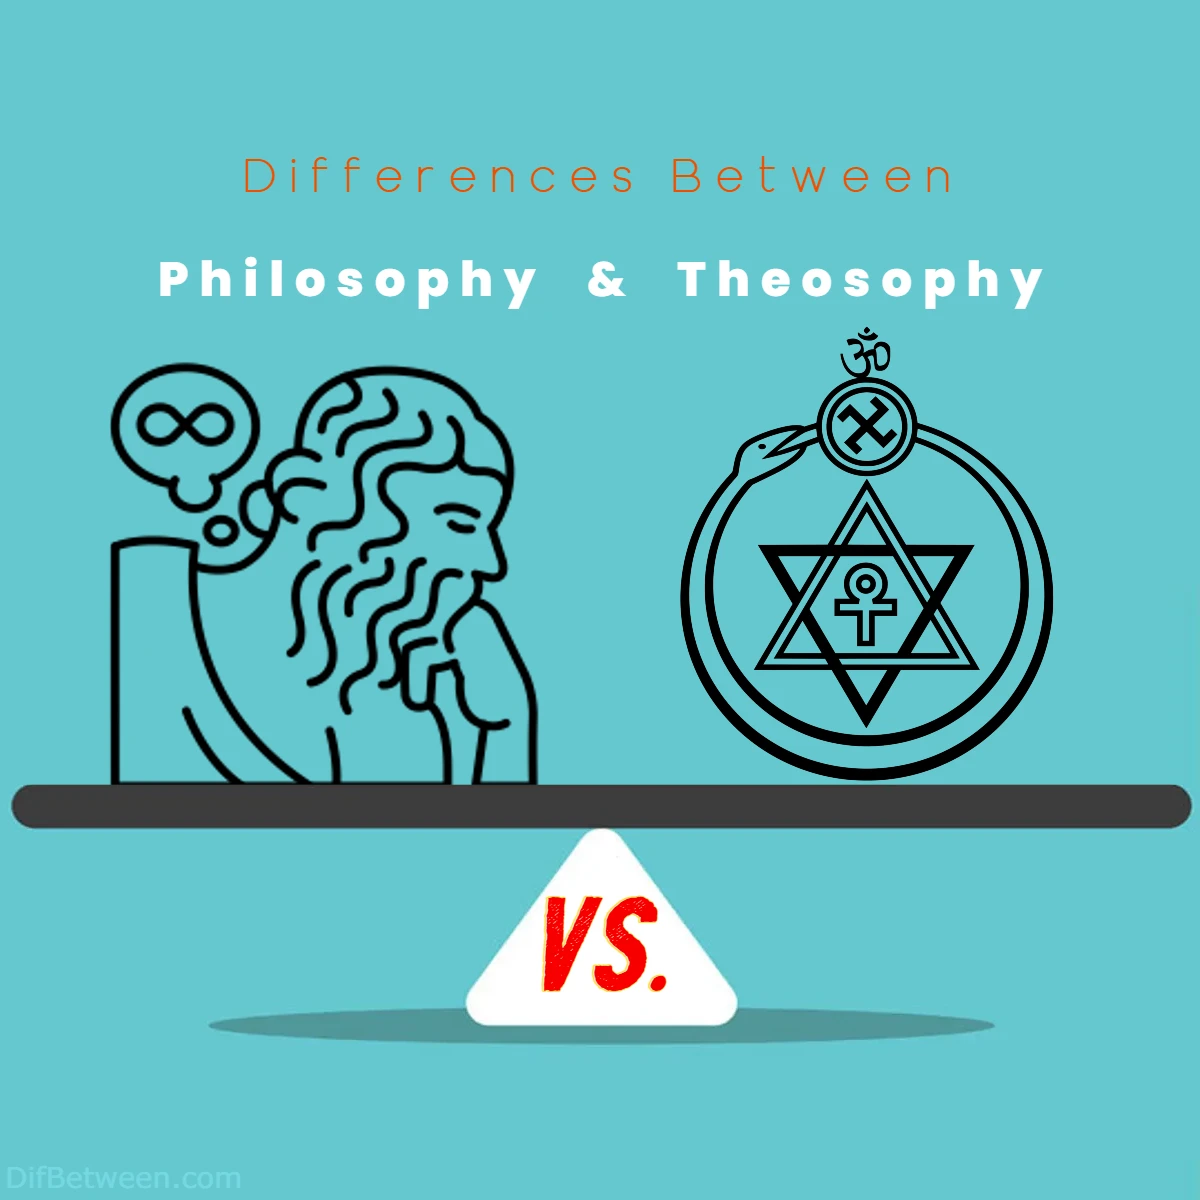 Differences Between Philosophy vs Theosophy